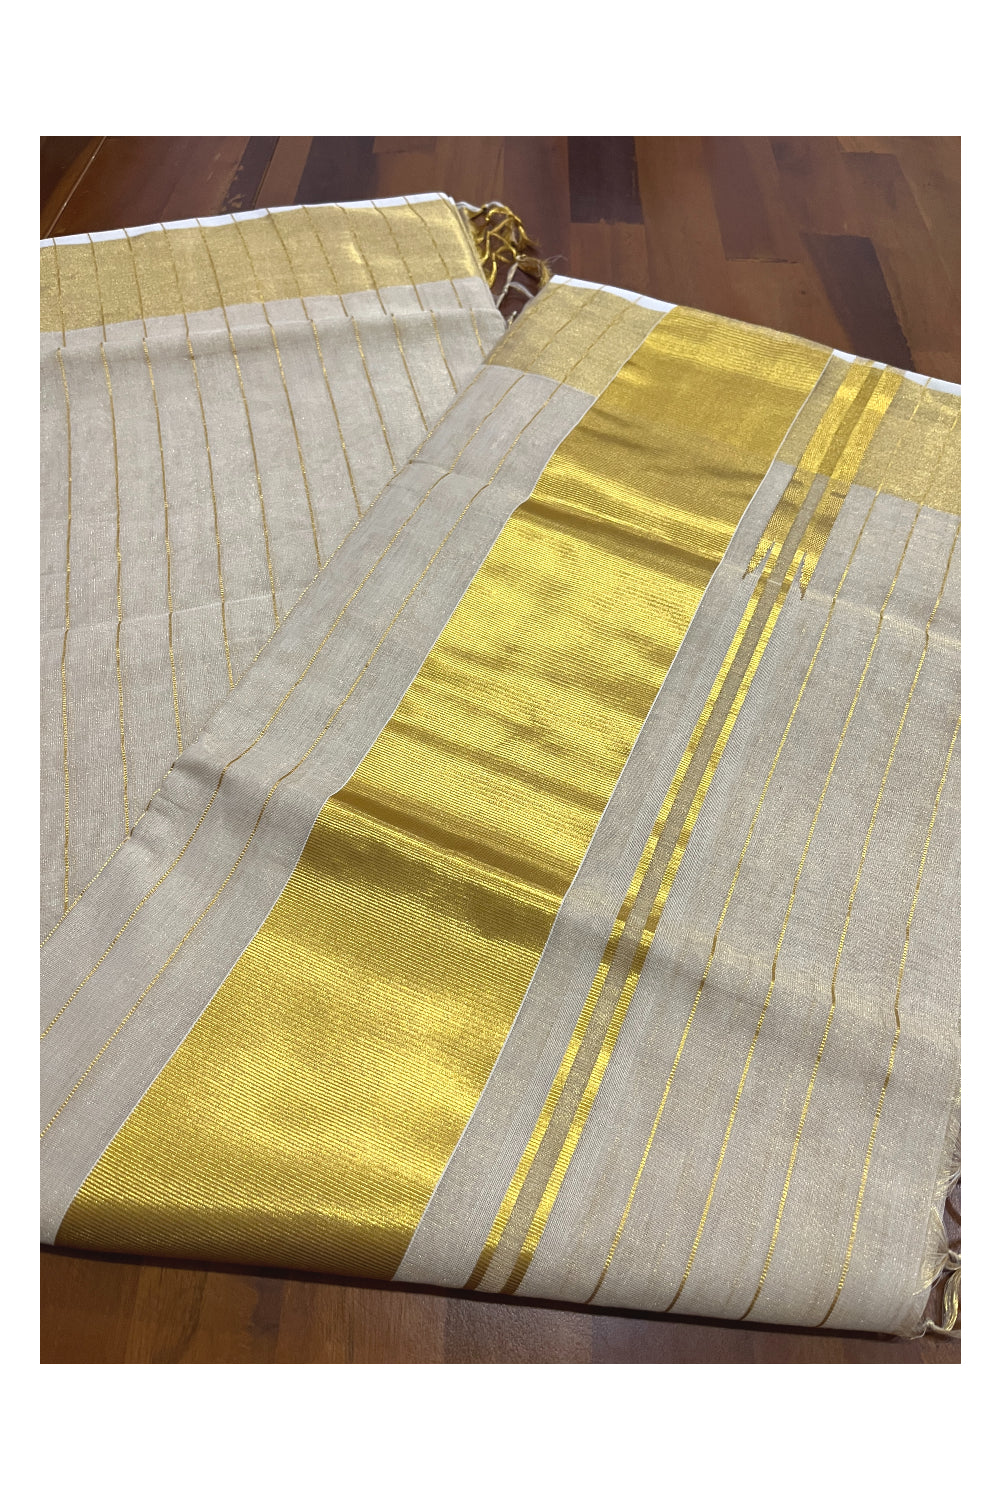 Southloom Handloom Premium Kerala Tissue Saree with Kasavu Lines Design Across Body